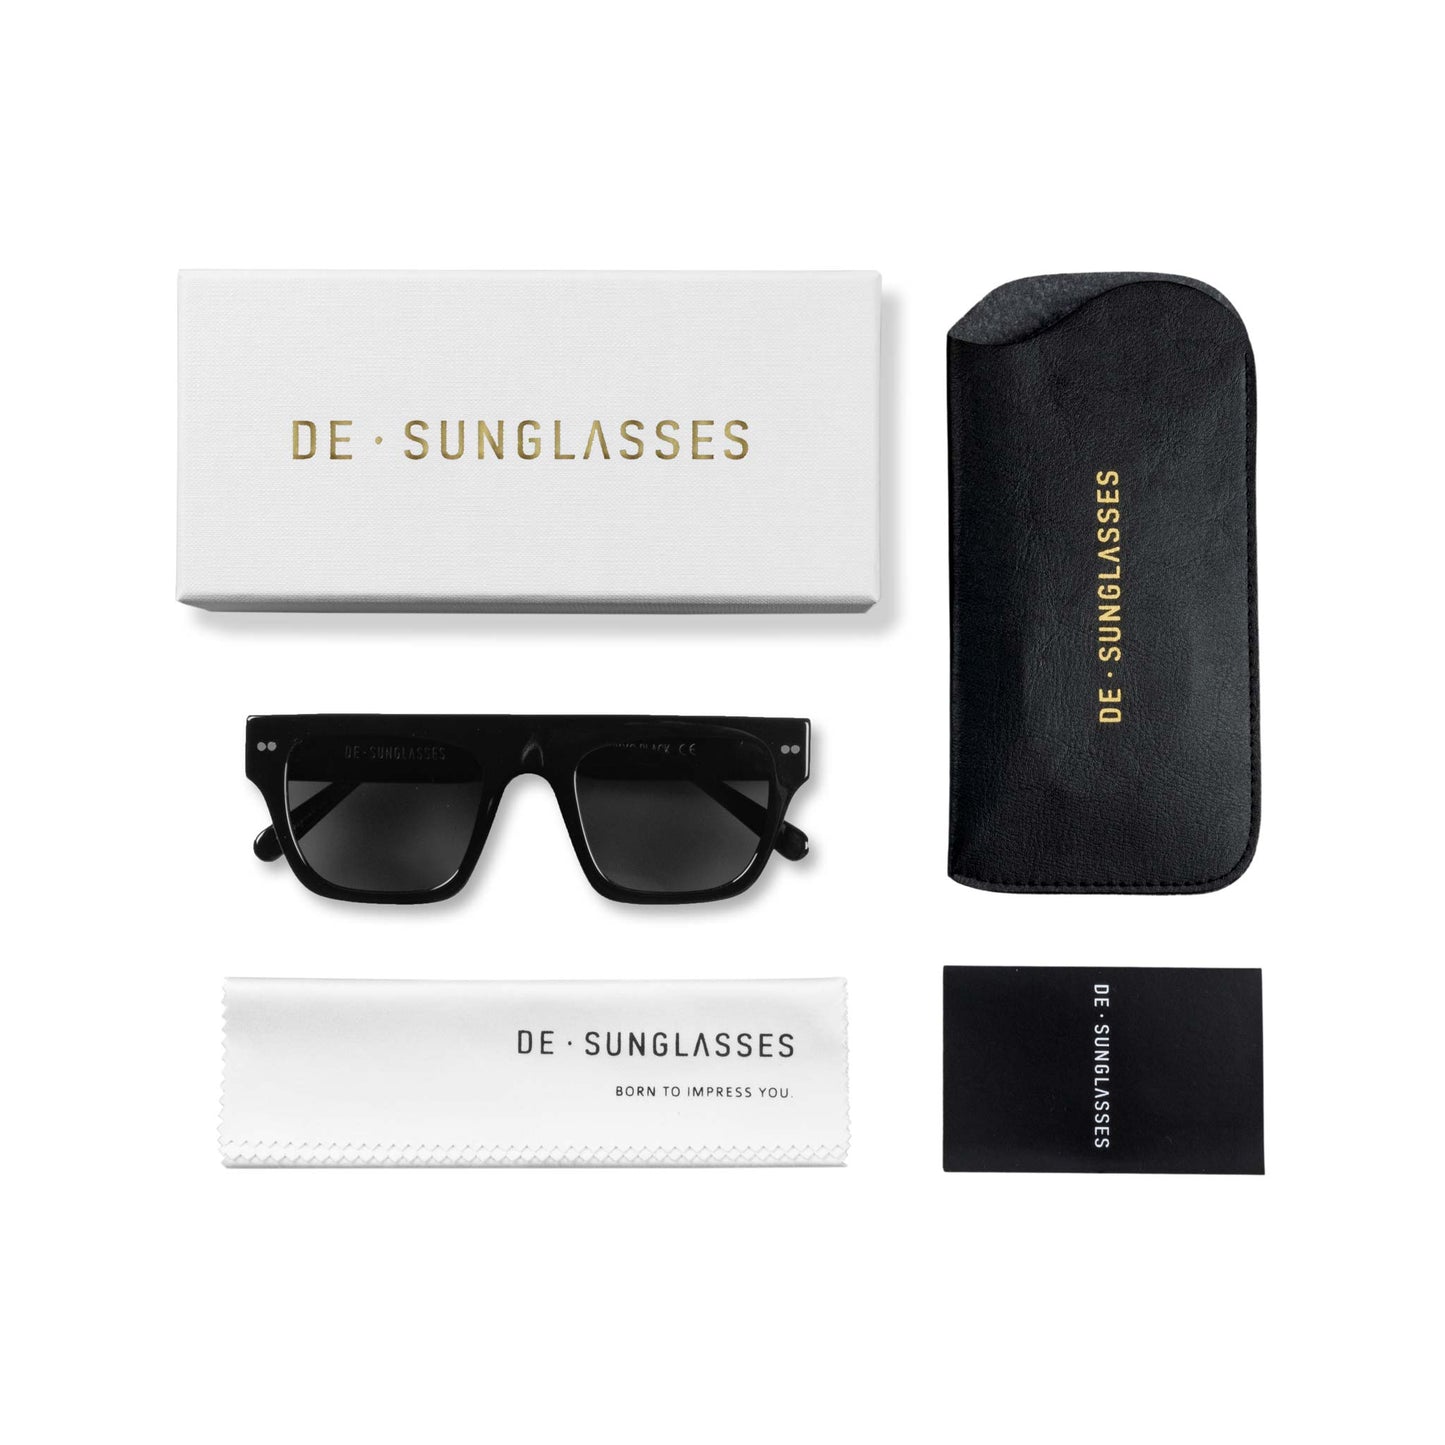 Tokyo Black De-sunglasses case